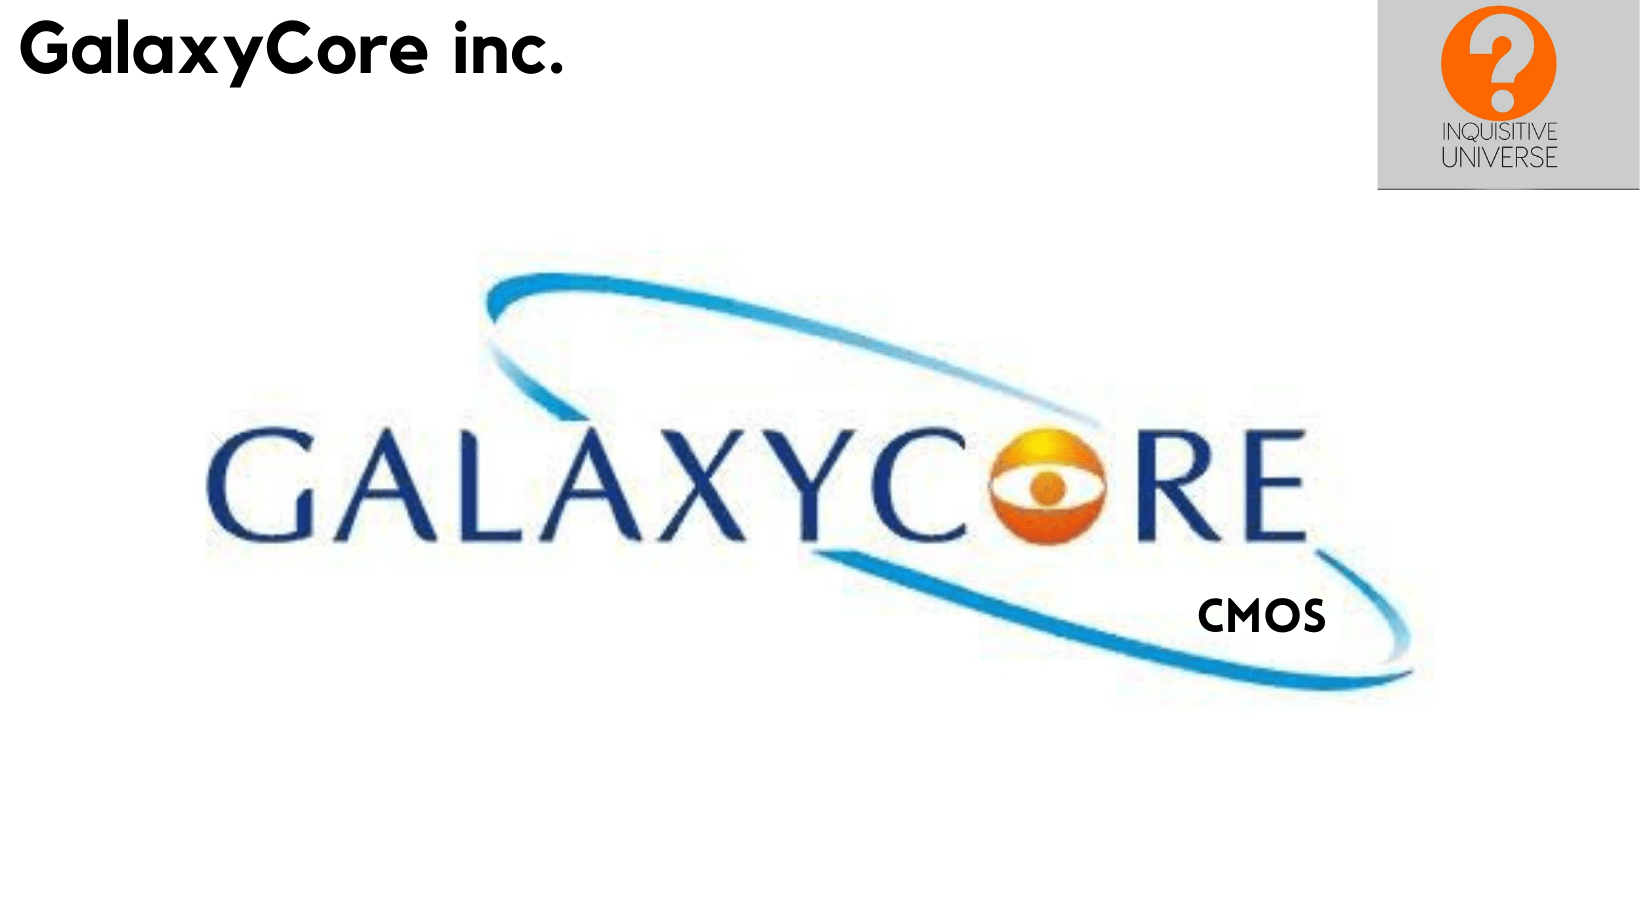 Galaxy Core CMOS sensors